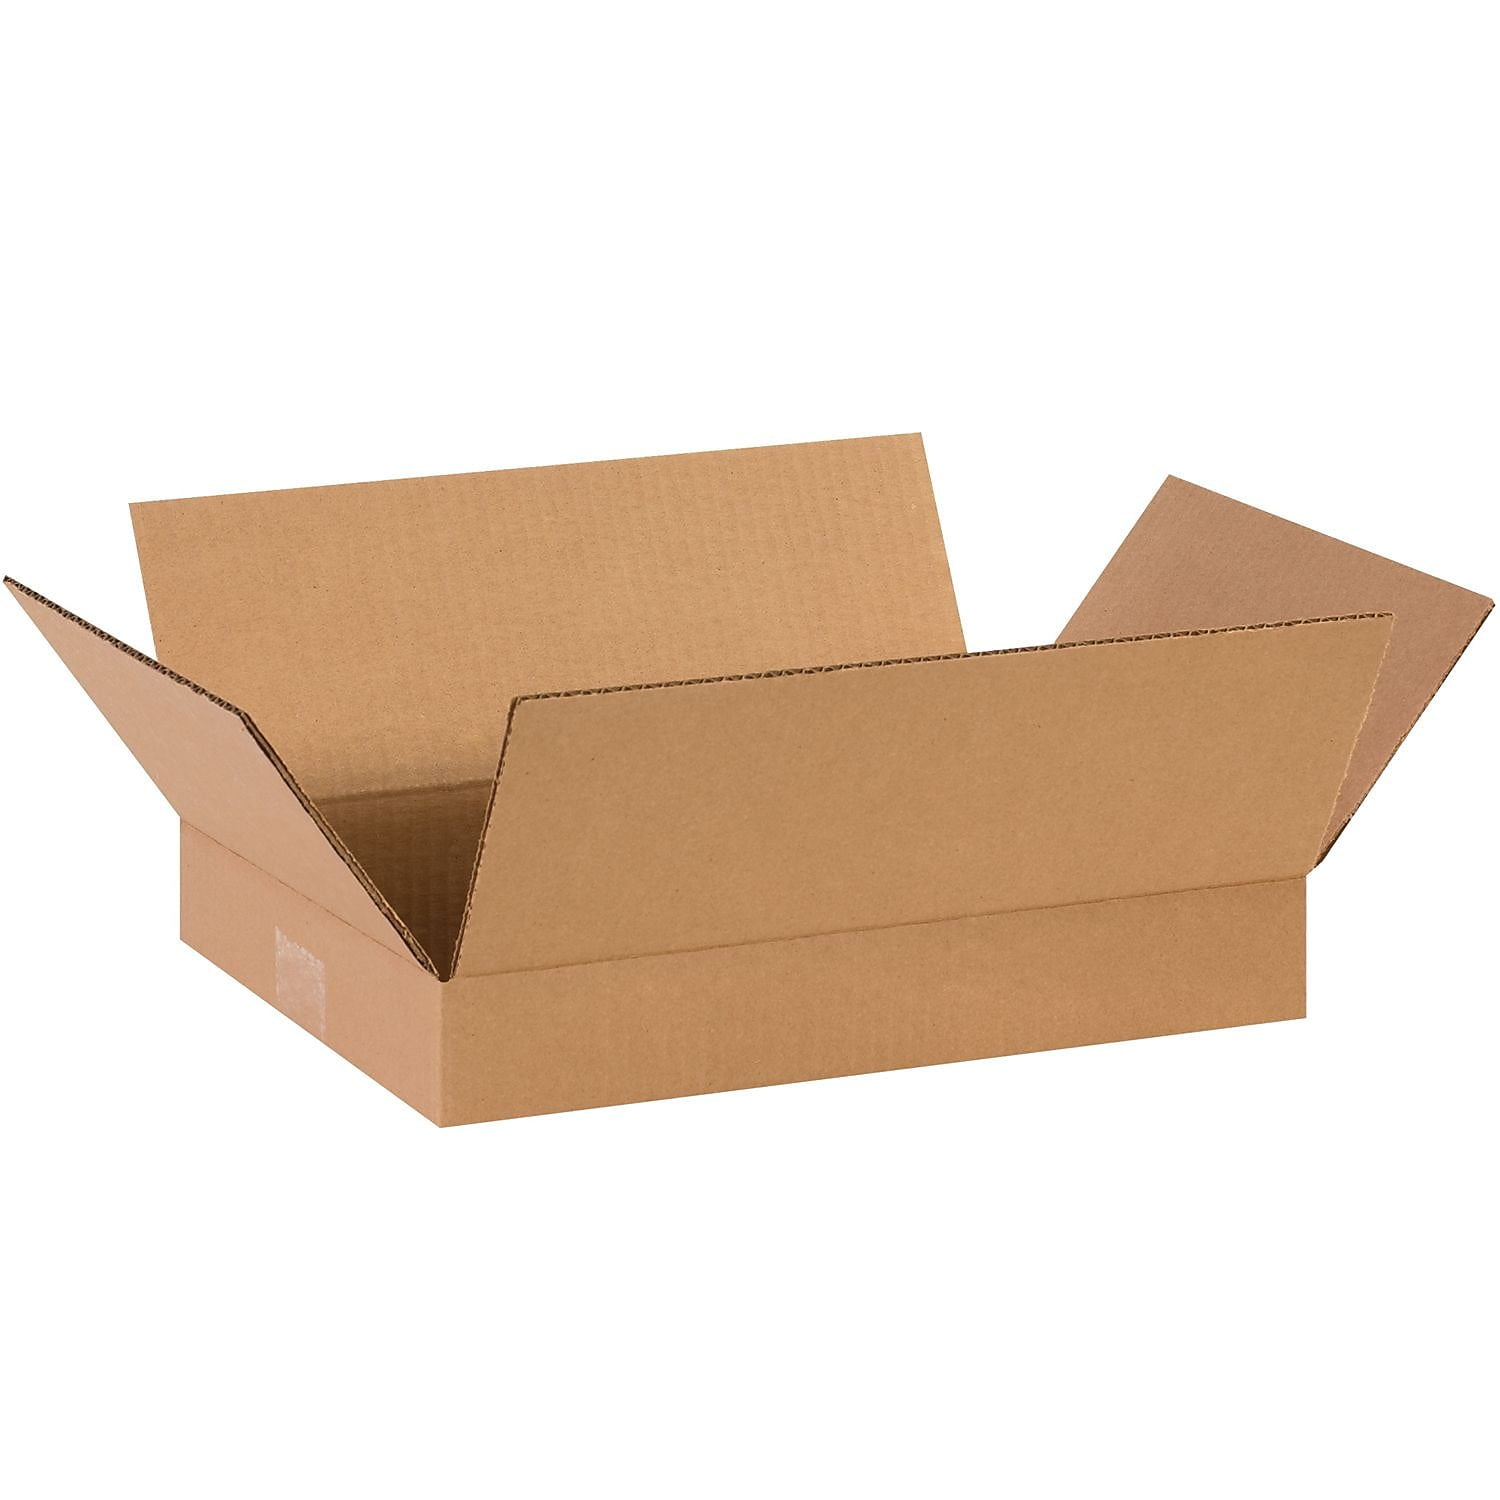 95 lbs Capacity, 11-1/4" x 8-3/4" x 12" Heavy-Duty Cardboard Corrugated Boxes 